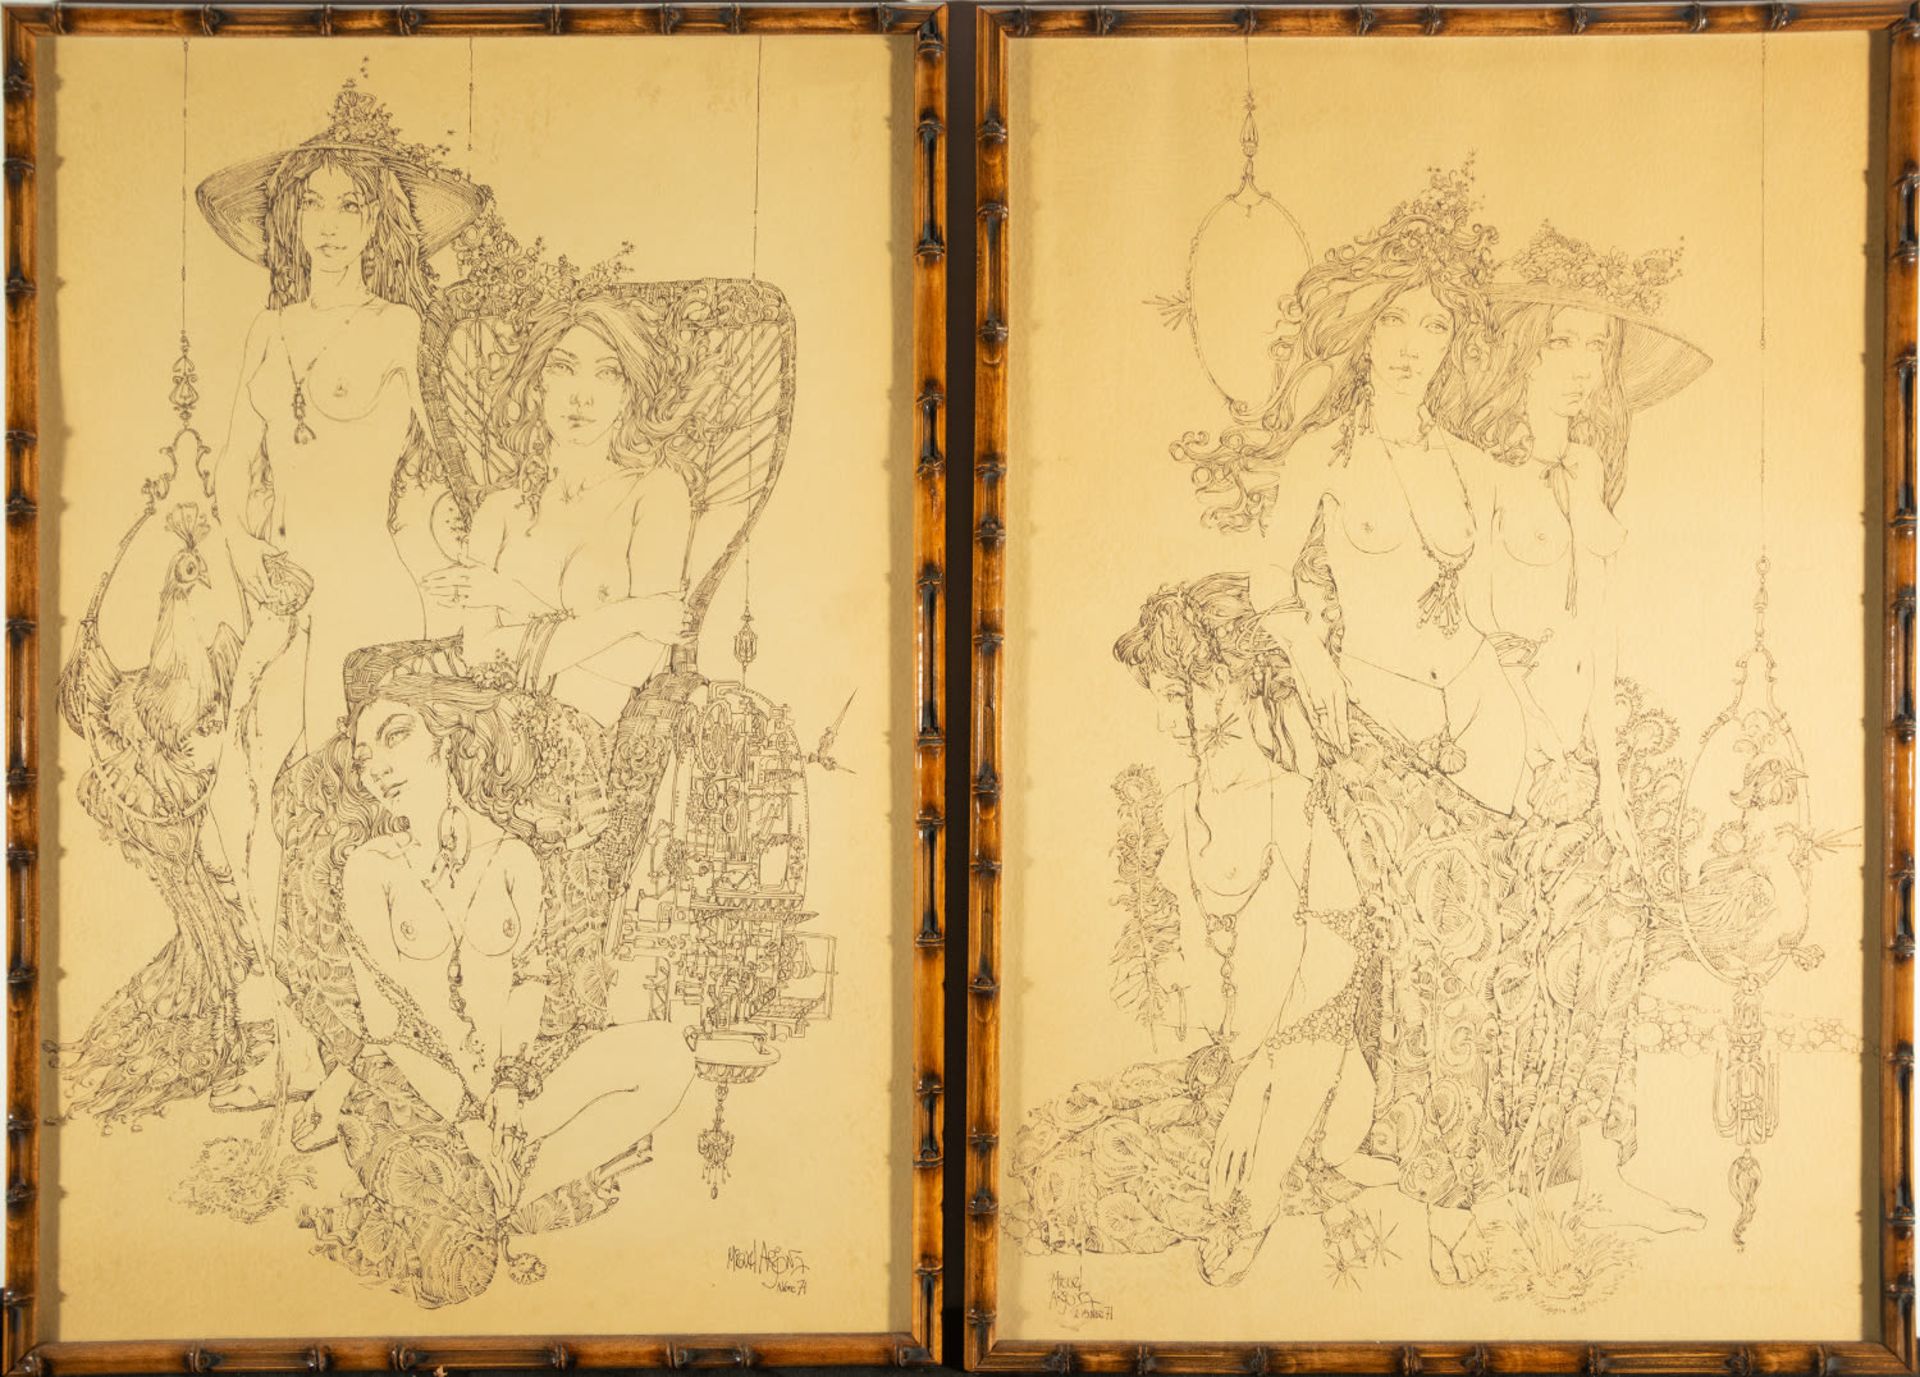 Pair of Erotic Drawings on paper, Miguel Arjona, 1971, Spanish school of the 20th century